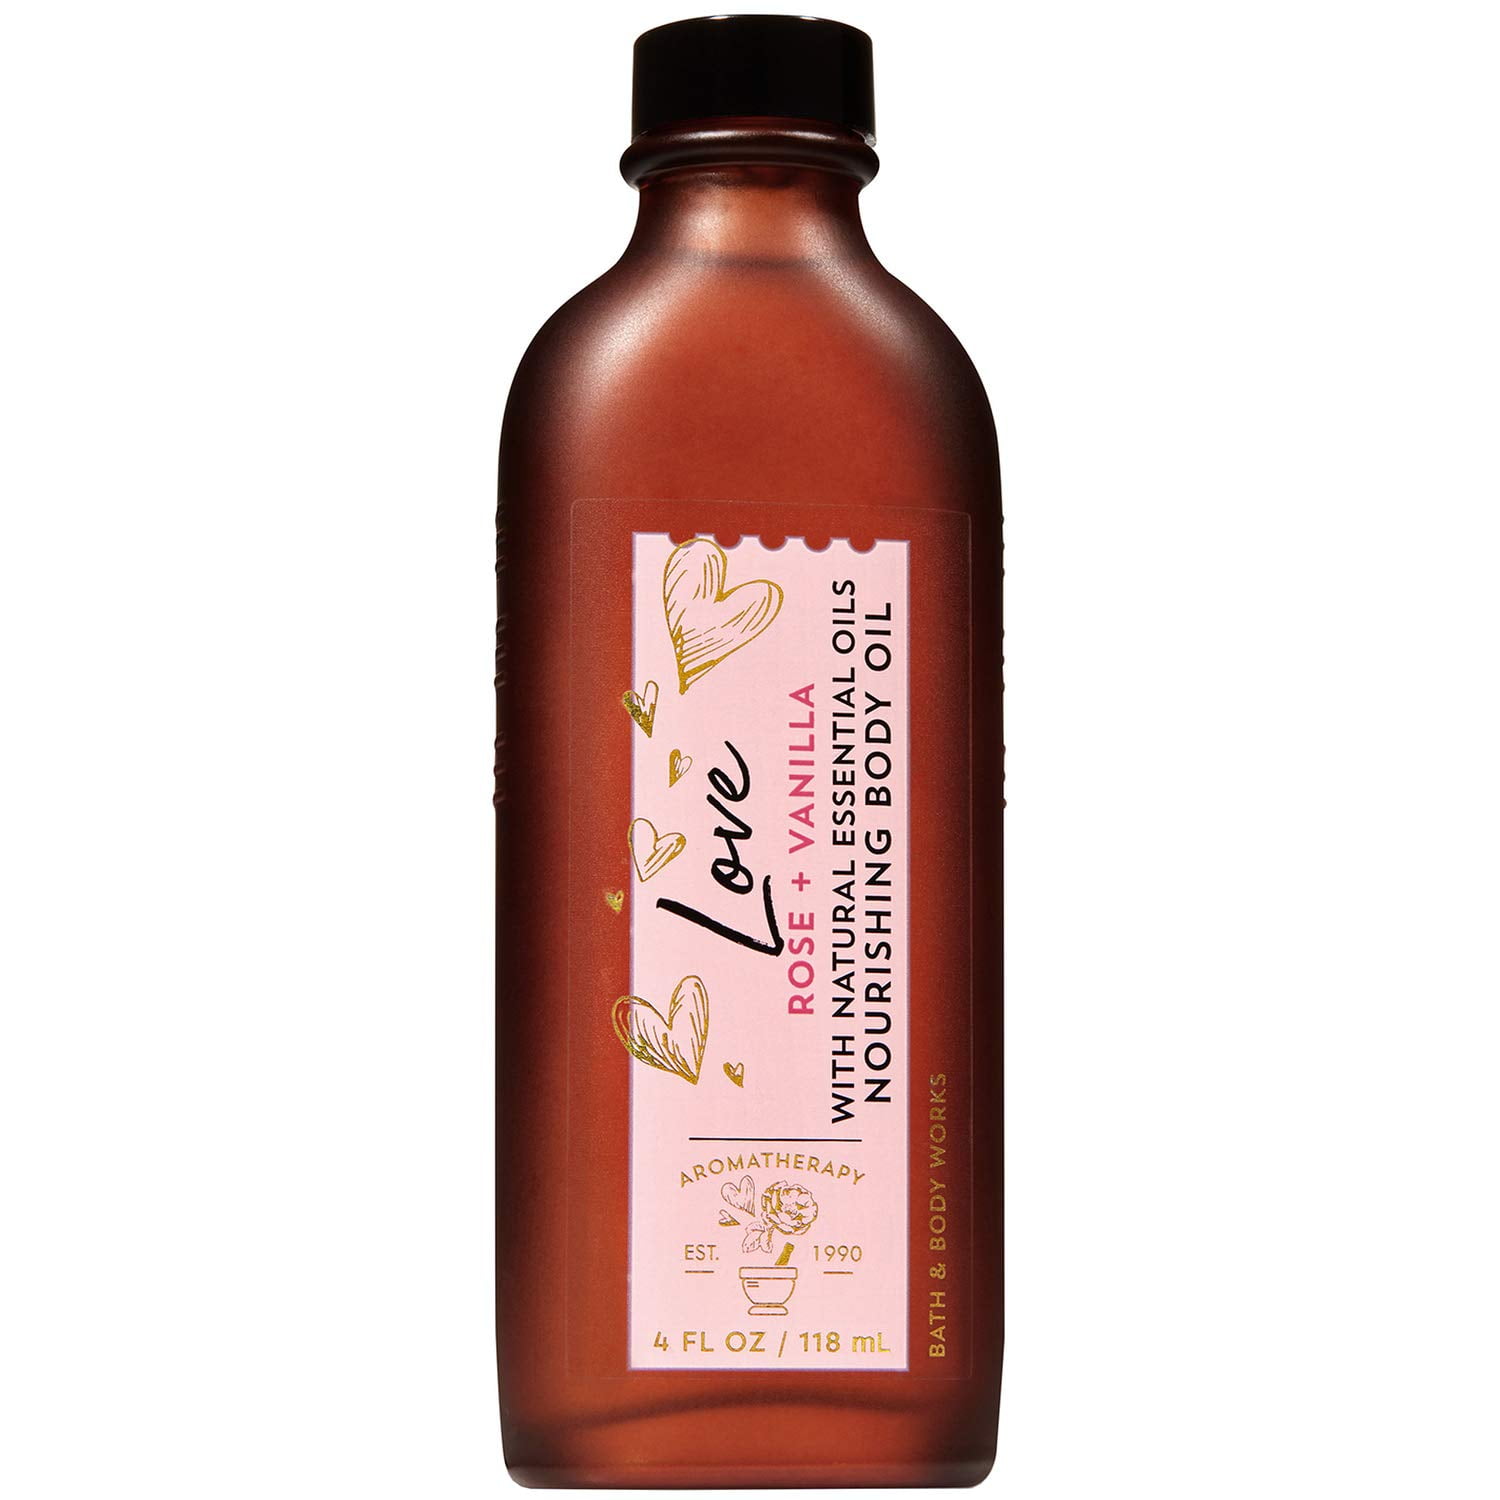 Pink Vanilla Body Oil – Royal Love Organics